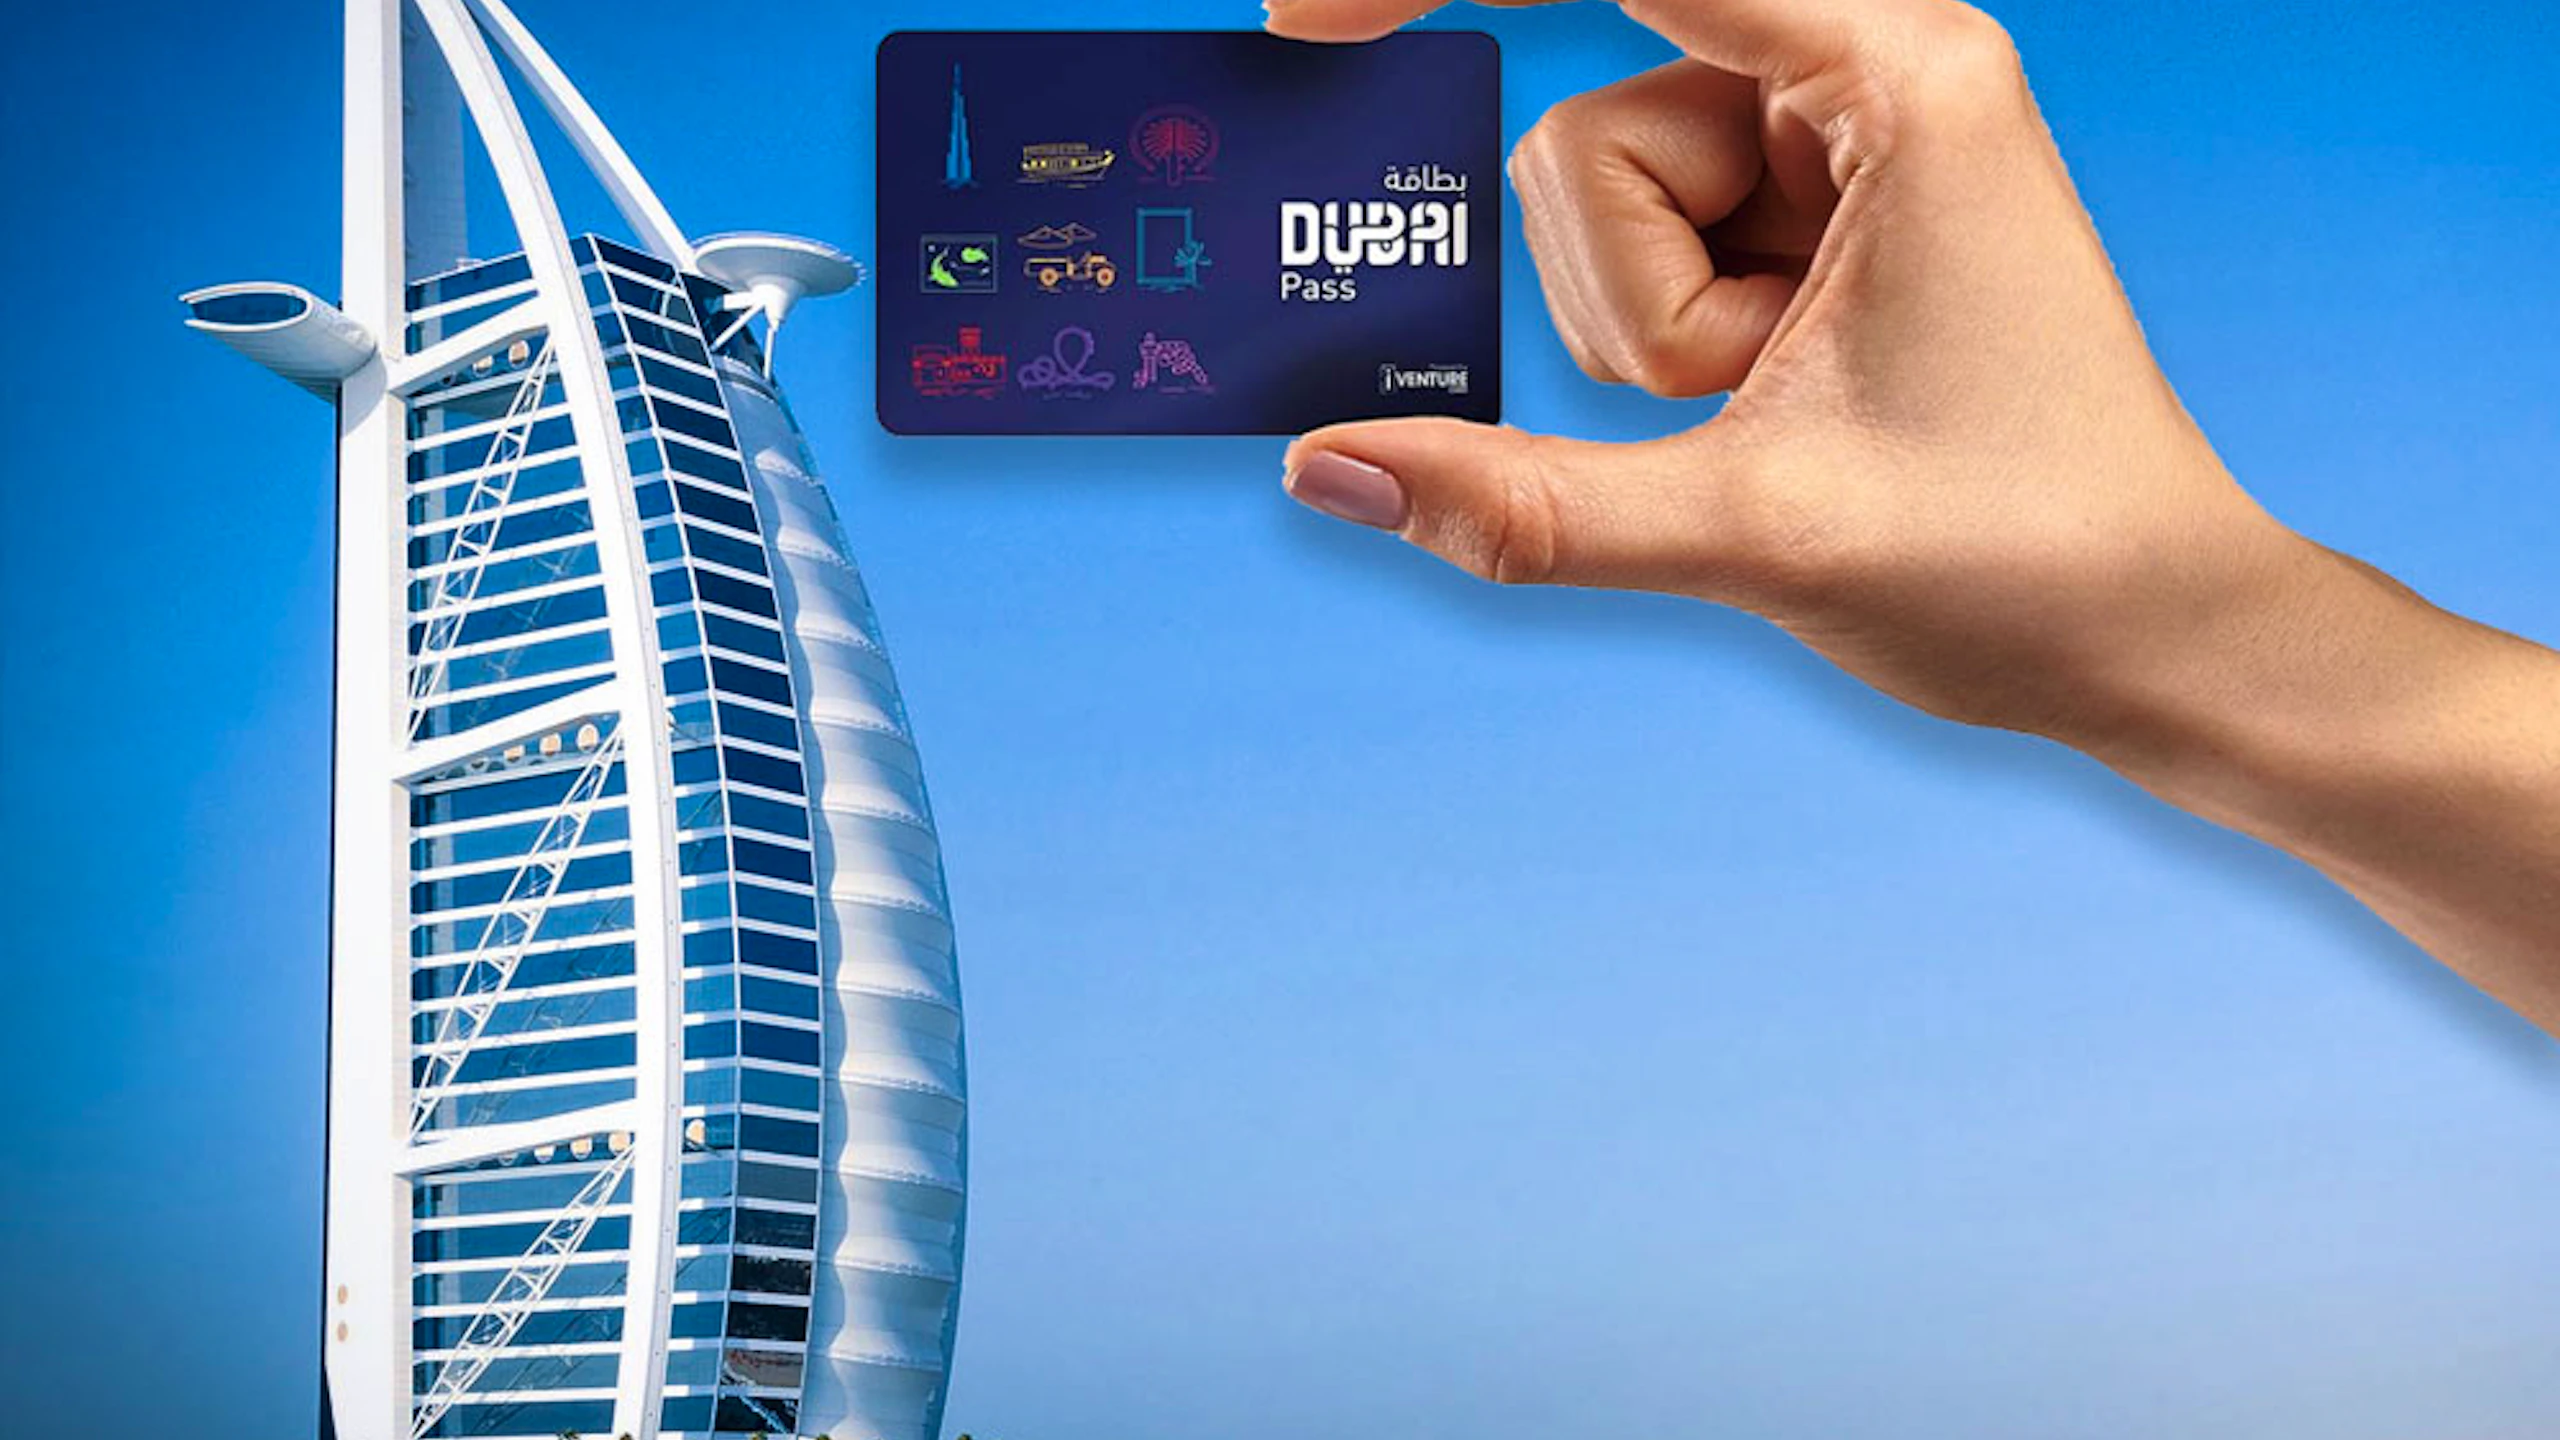 Dubai Pass - Unlimited  